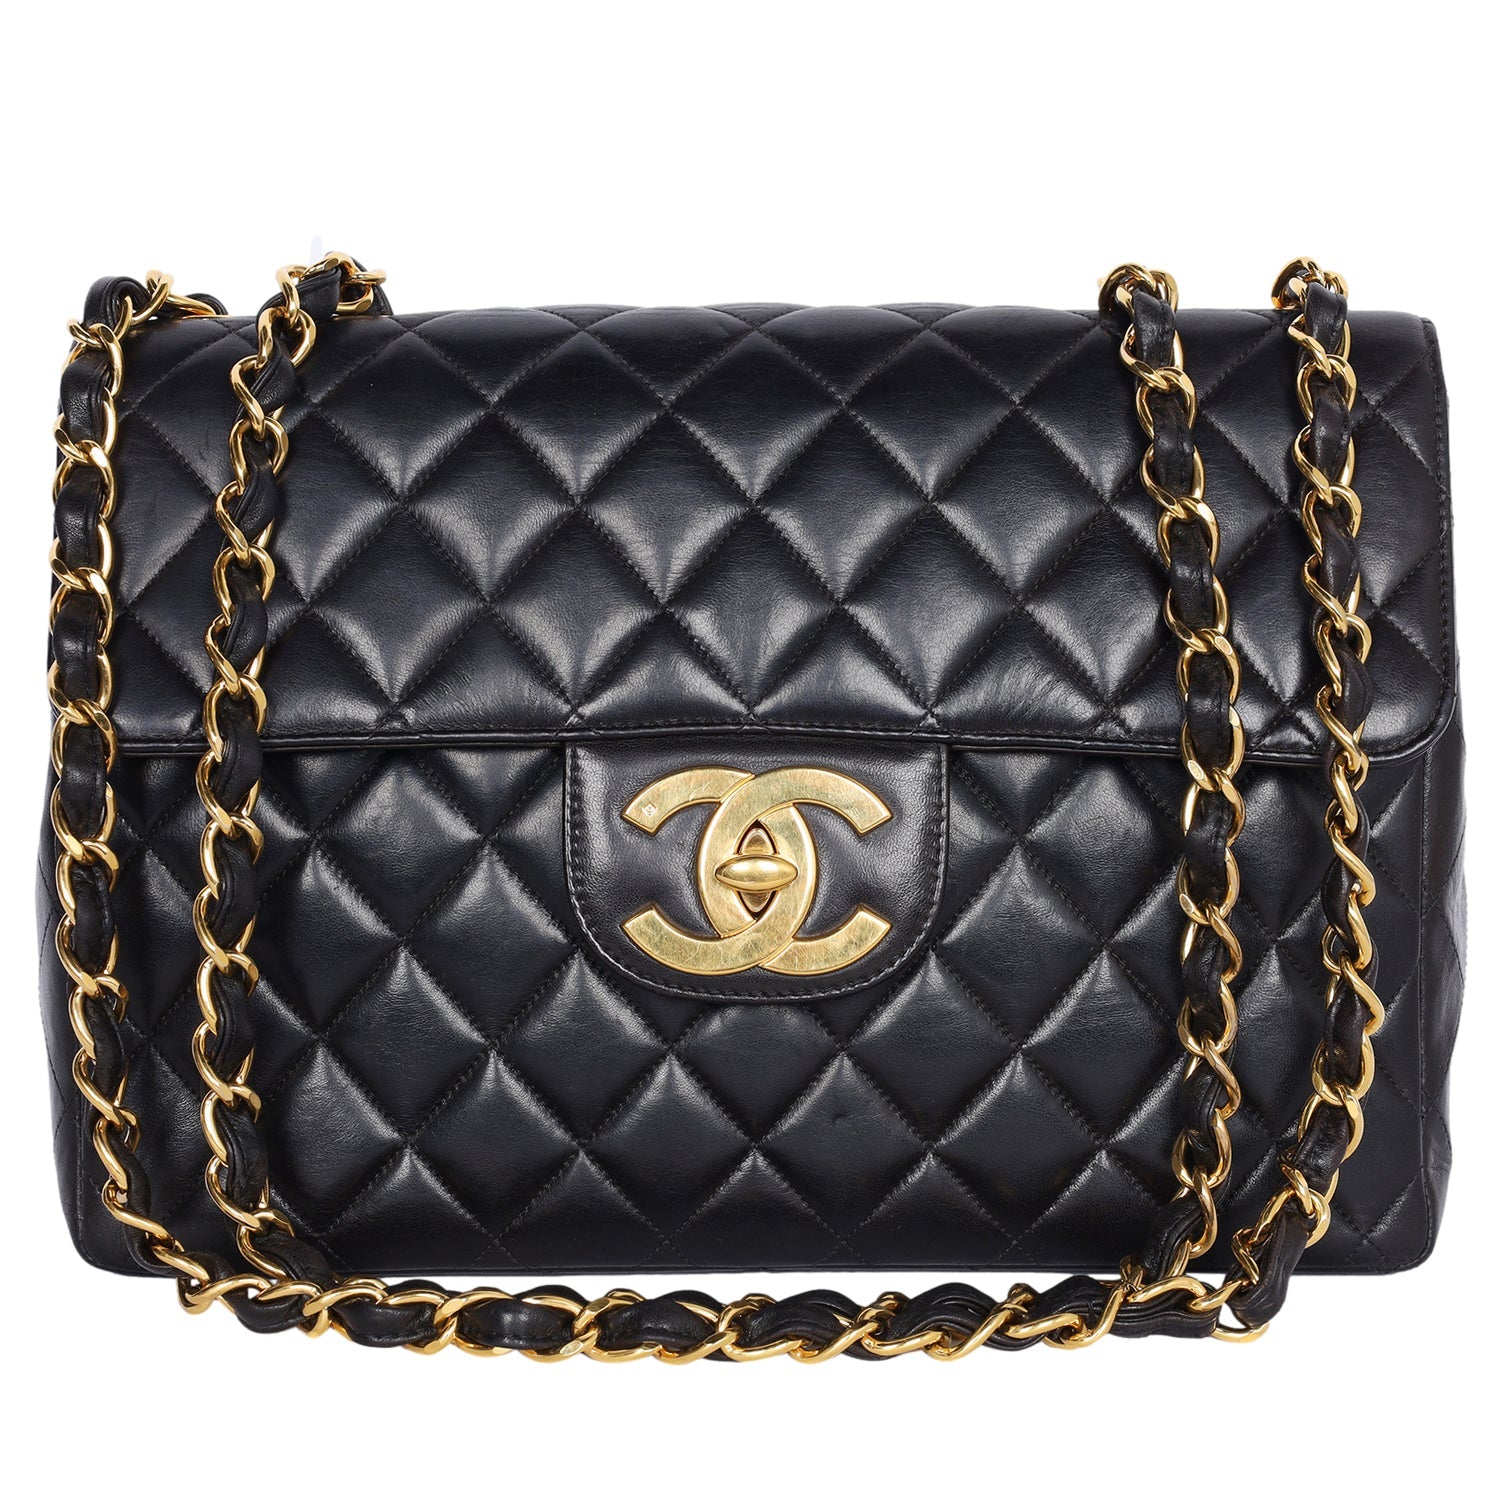 CC Vintage Chanel Jumbo Classic Flap Bag